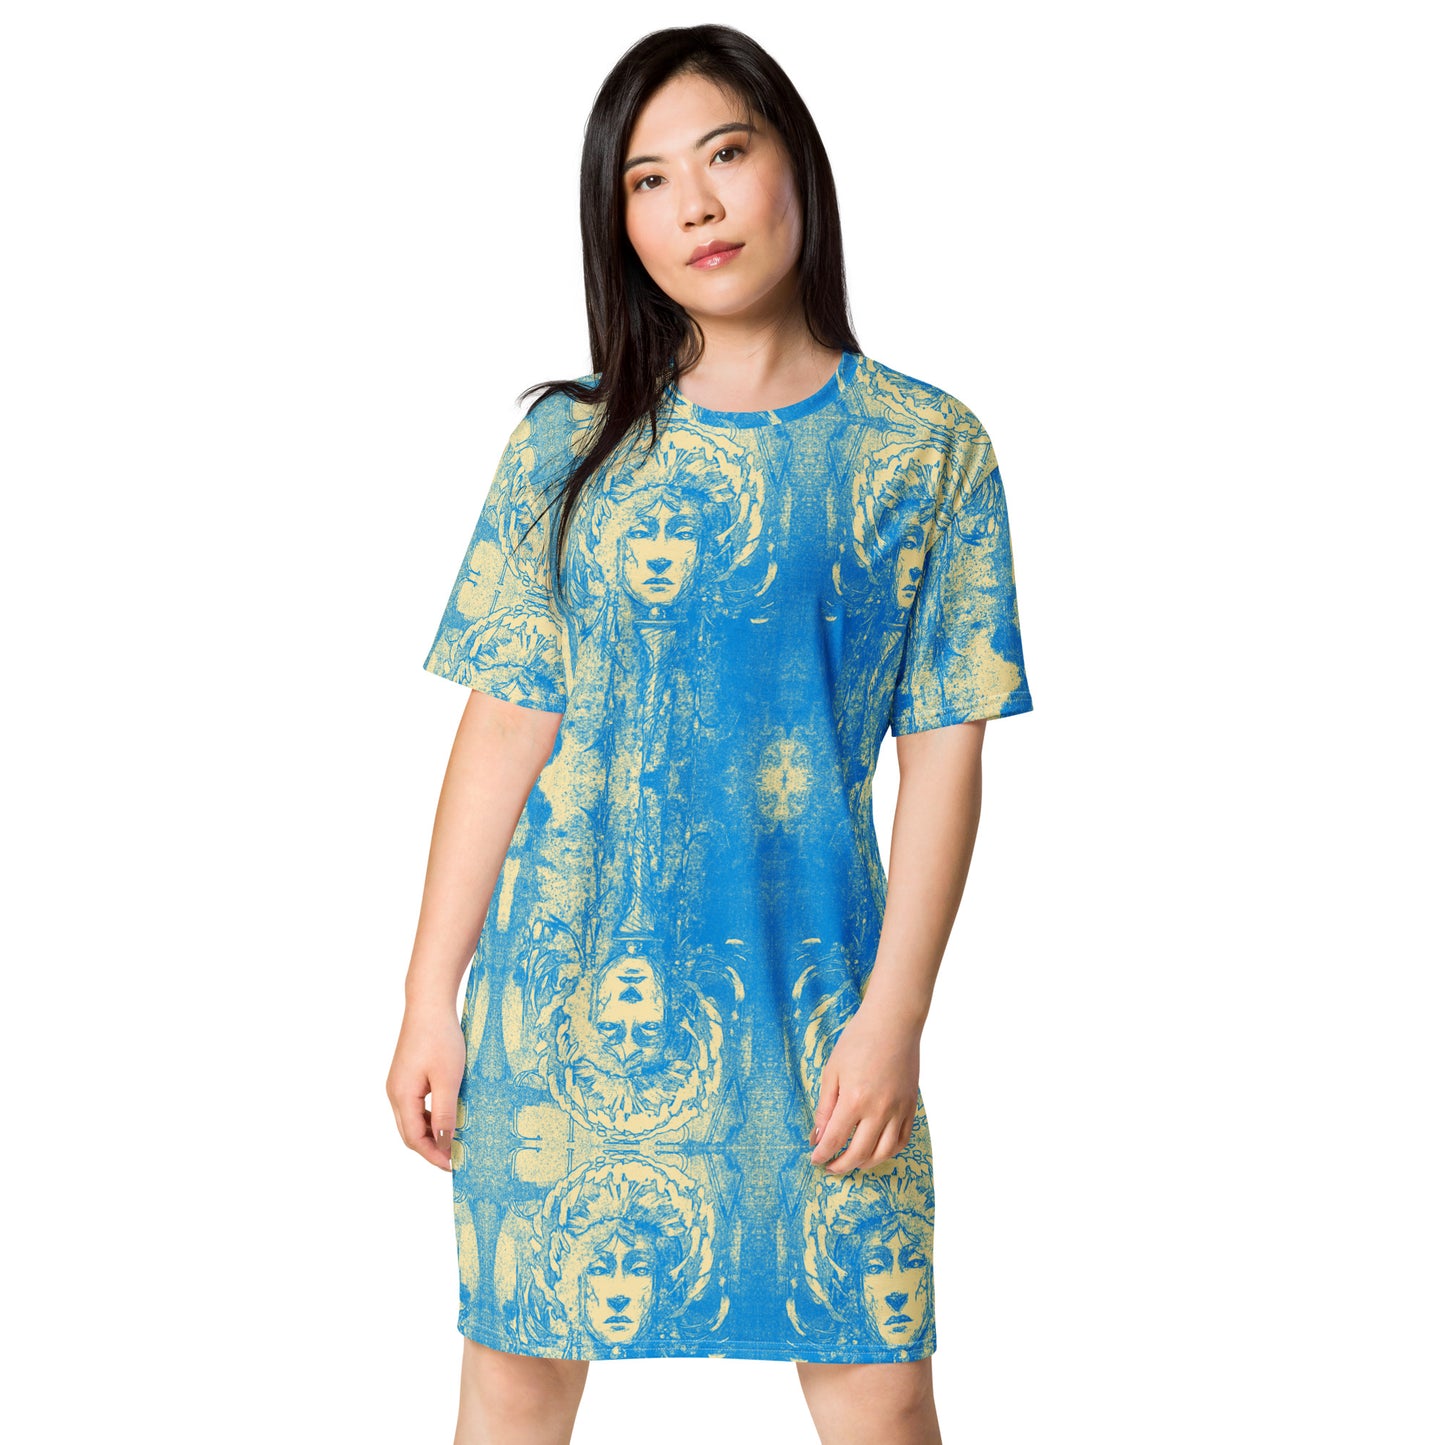 BLUE CITRV T-shirt dress